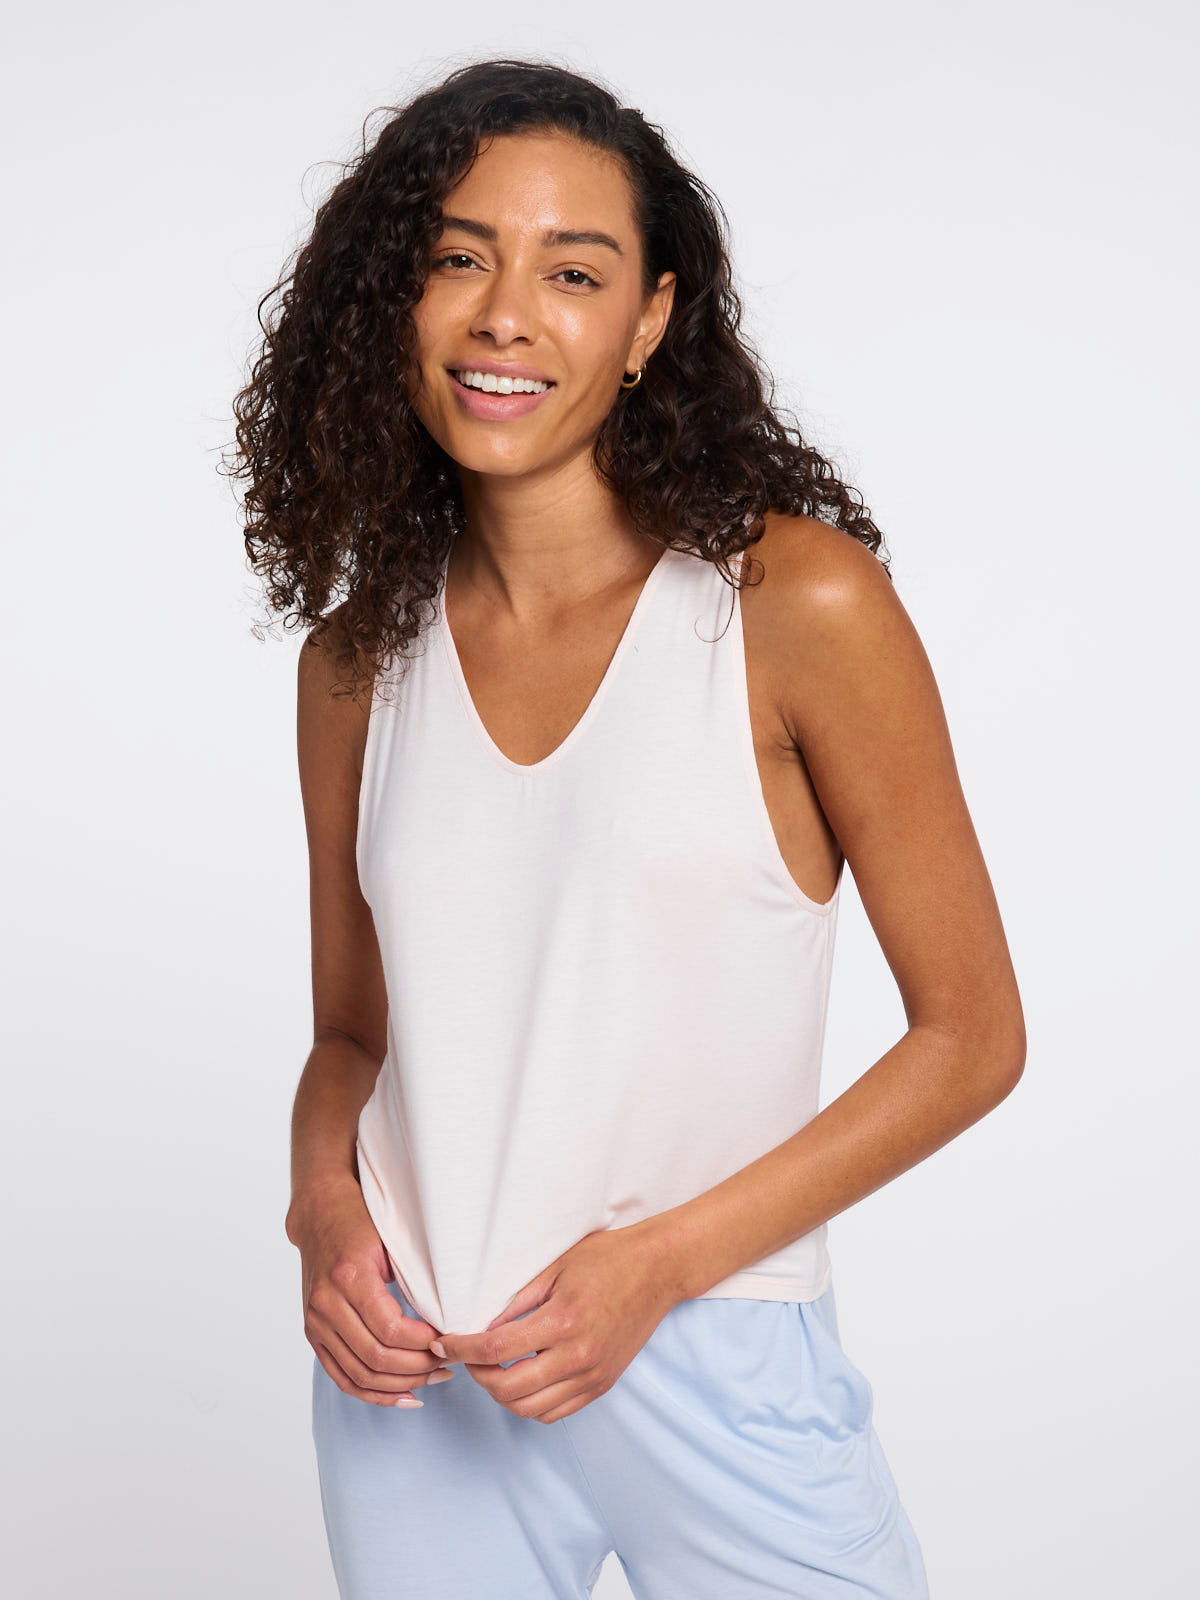 White Silk Camisoles Top For Women Soft Sleep Tanks Loungewear